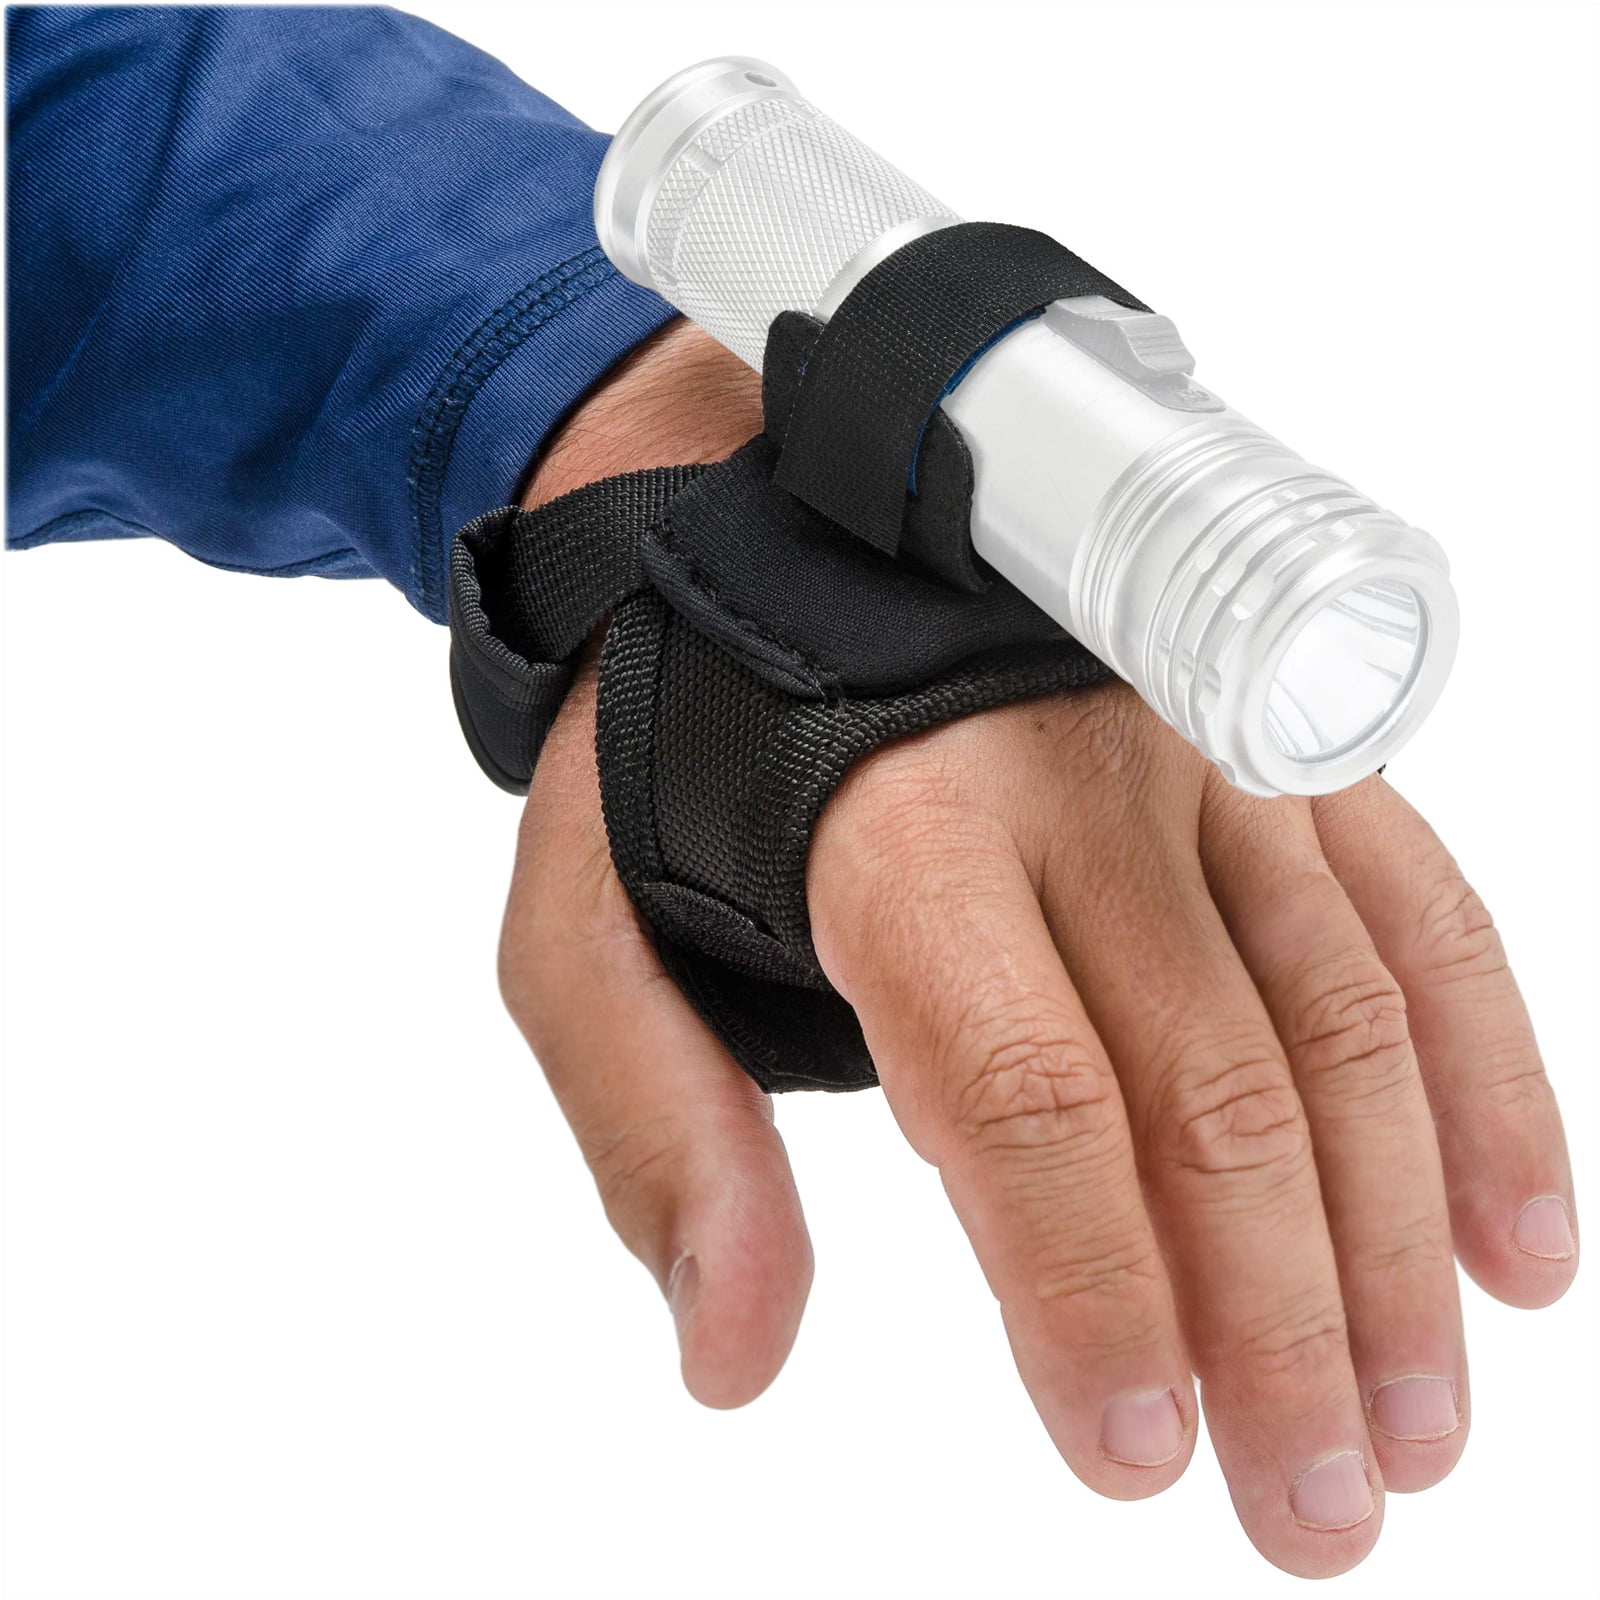 Details about   Outdoor Adjustable Diving Flashlight Wrist Strip Flashlight Equipments 